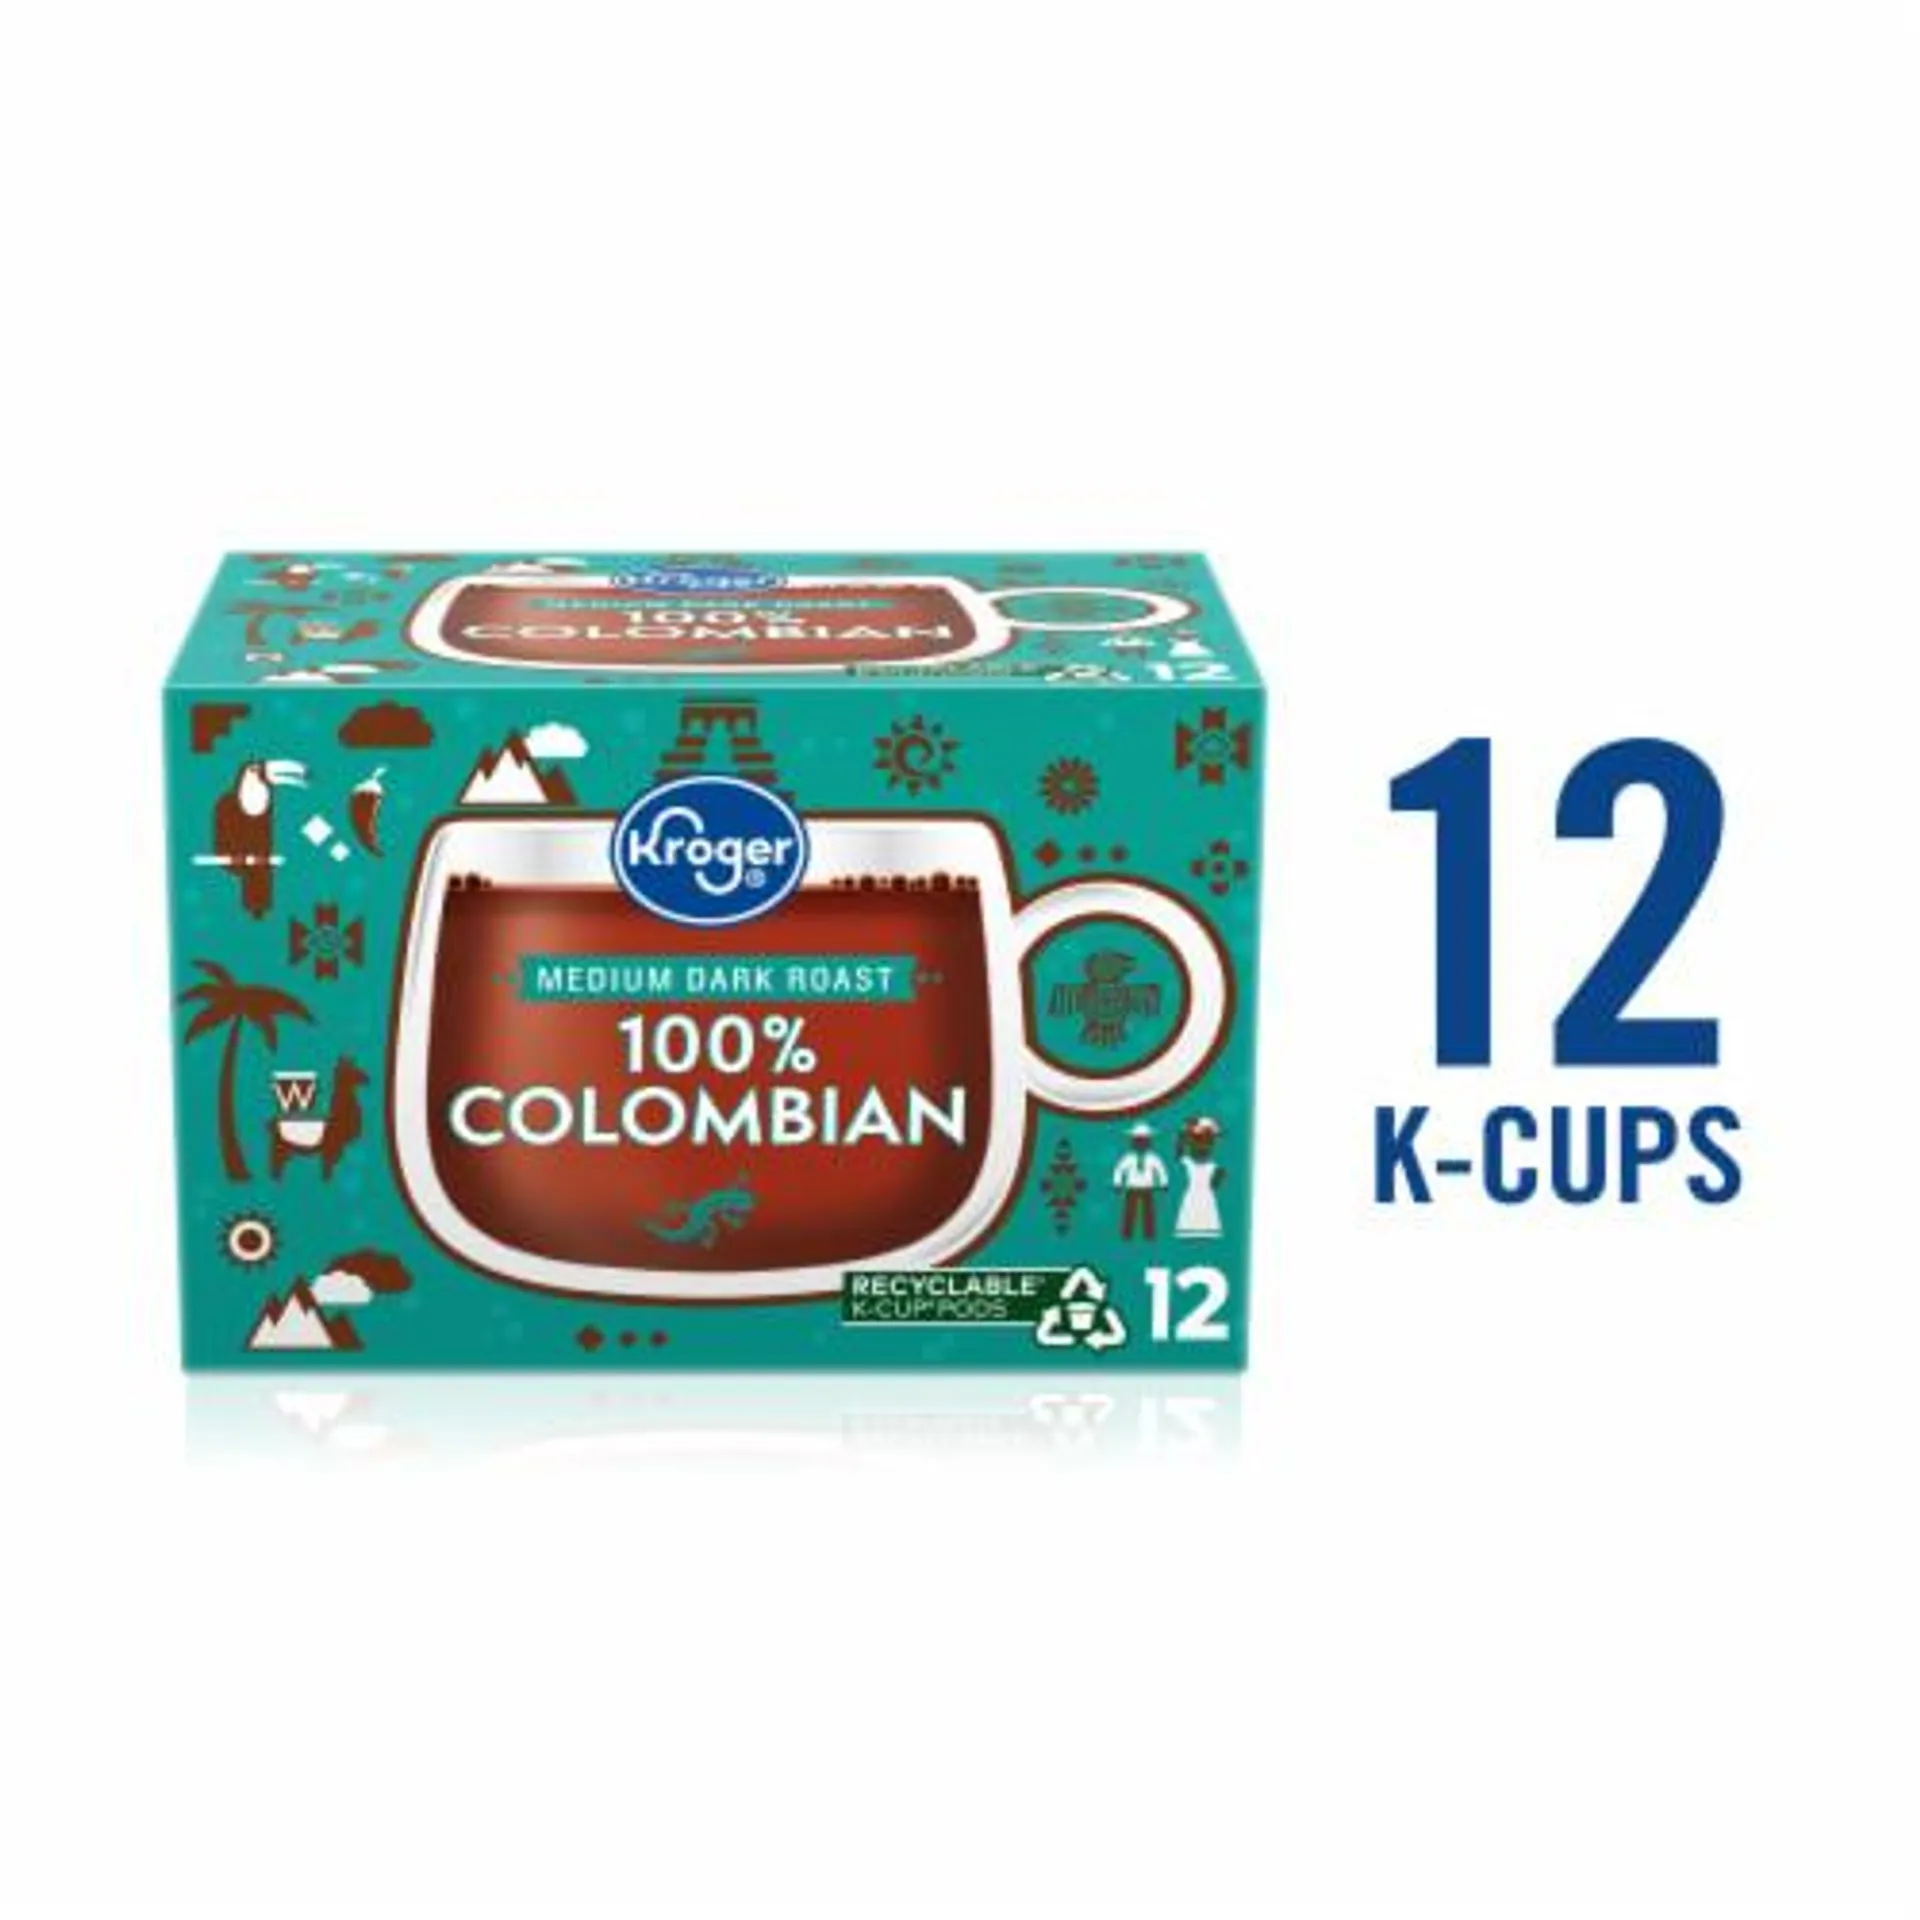 Kroger® Medium Dark Roast Colombian Coffee K-Cup Pods